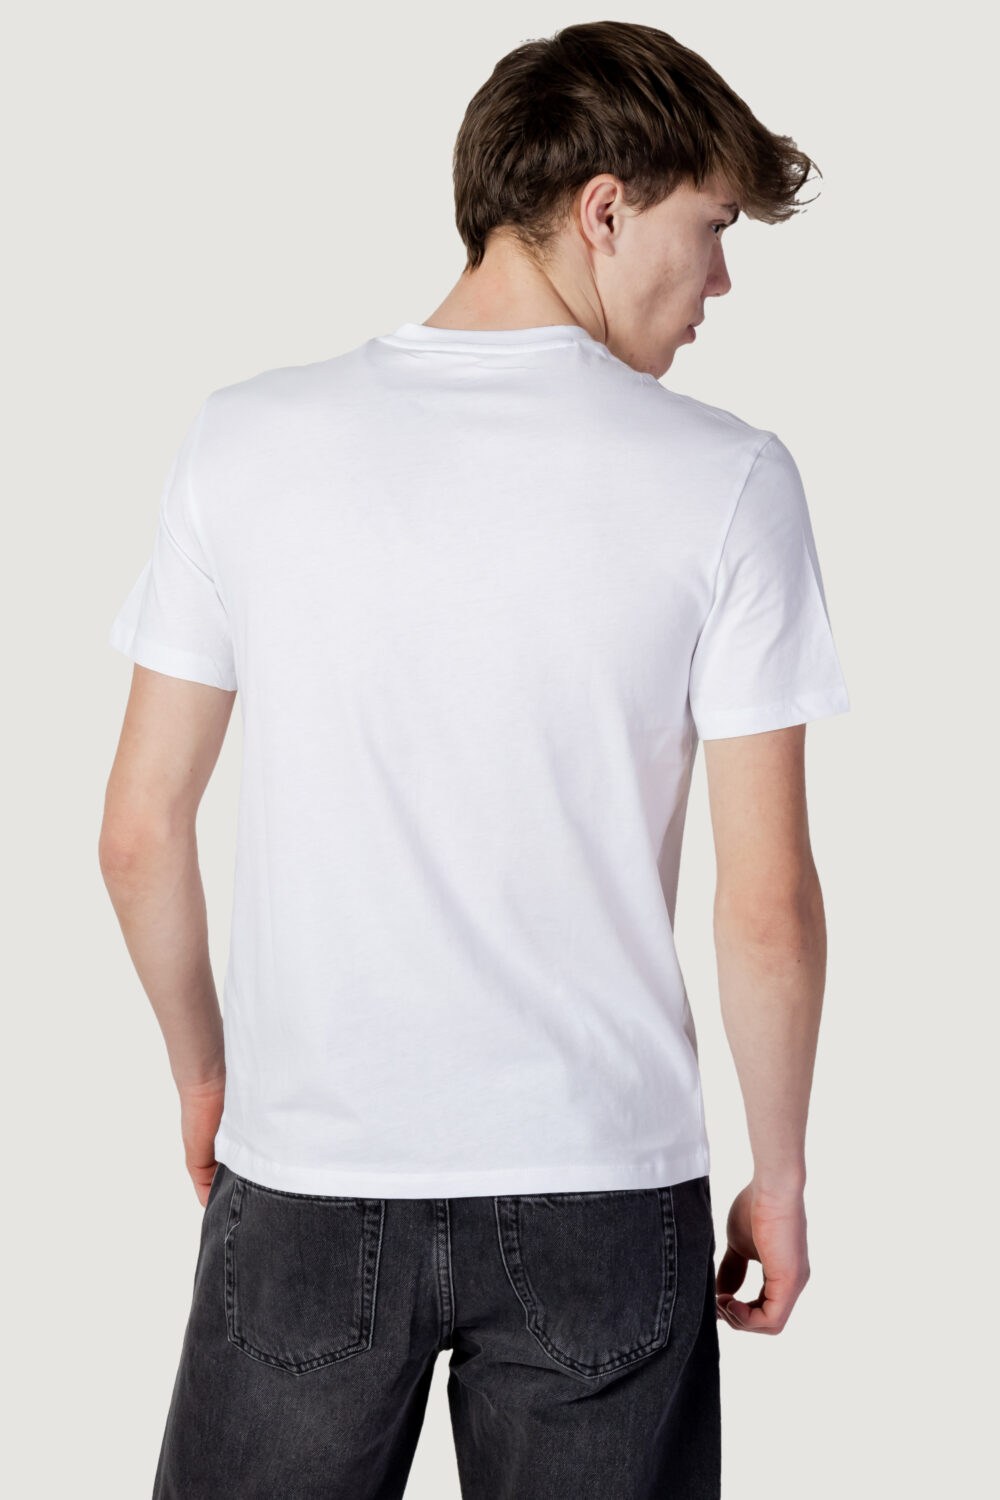 T-shirt Tommy Hilfiger Jeans TJM CLSC GRAPHIC SIG Bianco - Foto 3